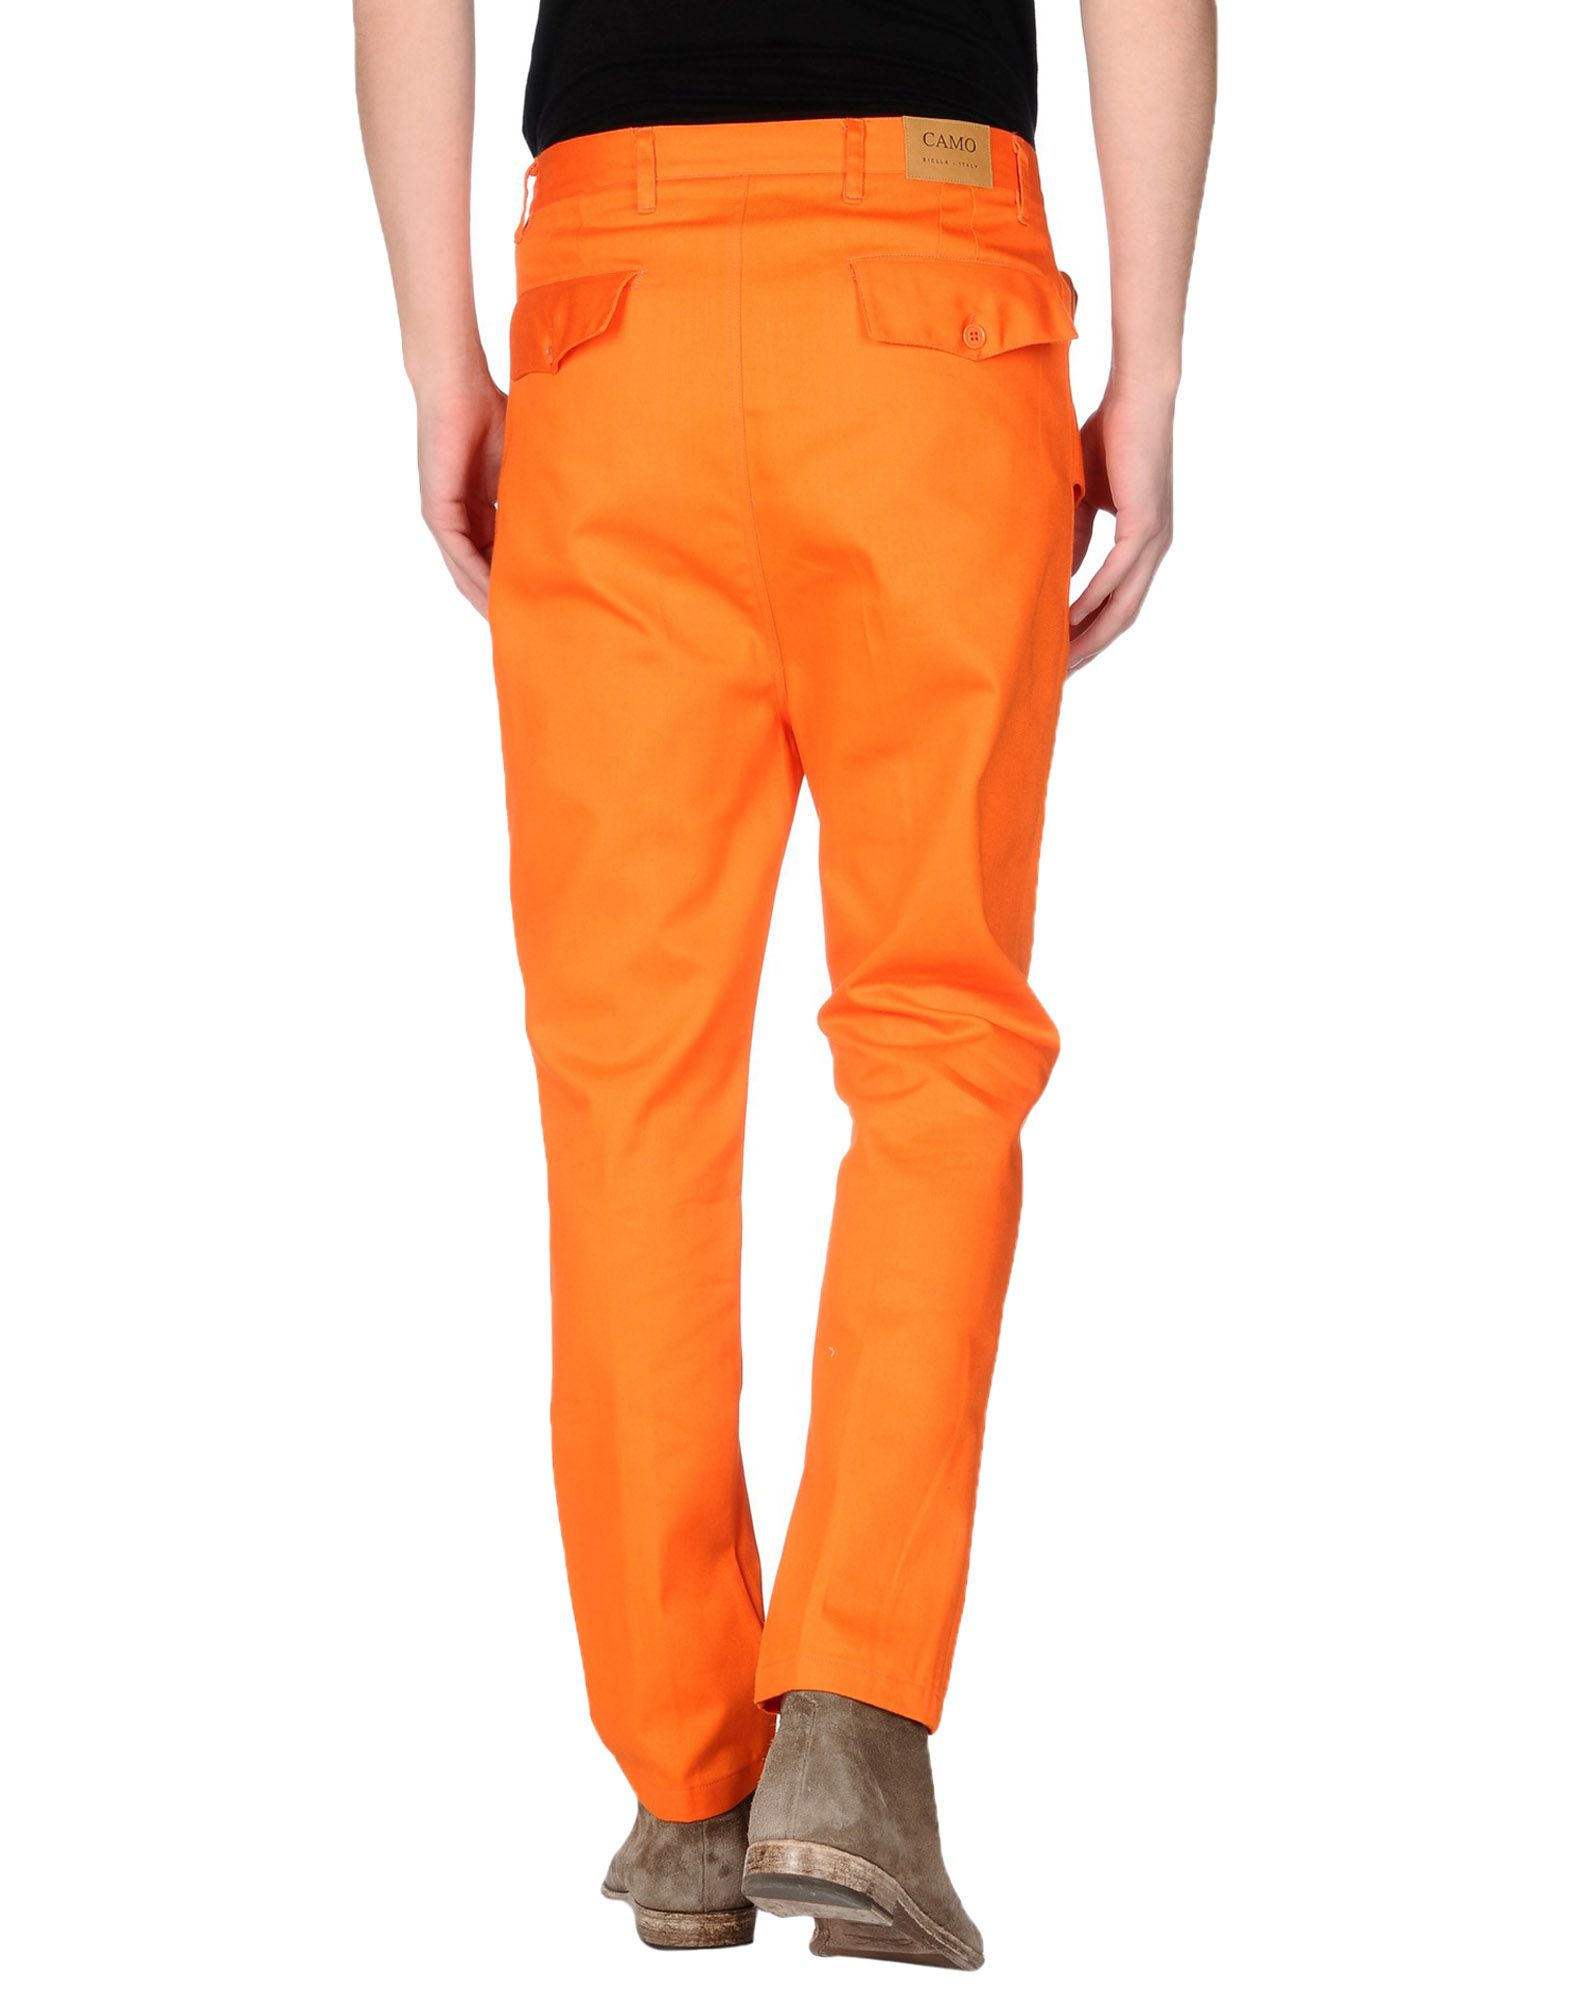 Lyst - Camo Casual Pants in Orange for Men